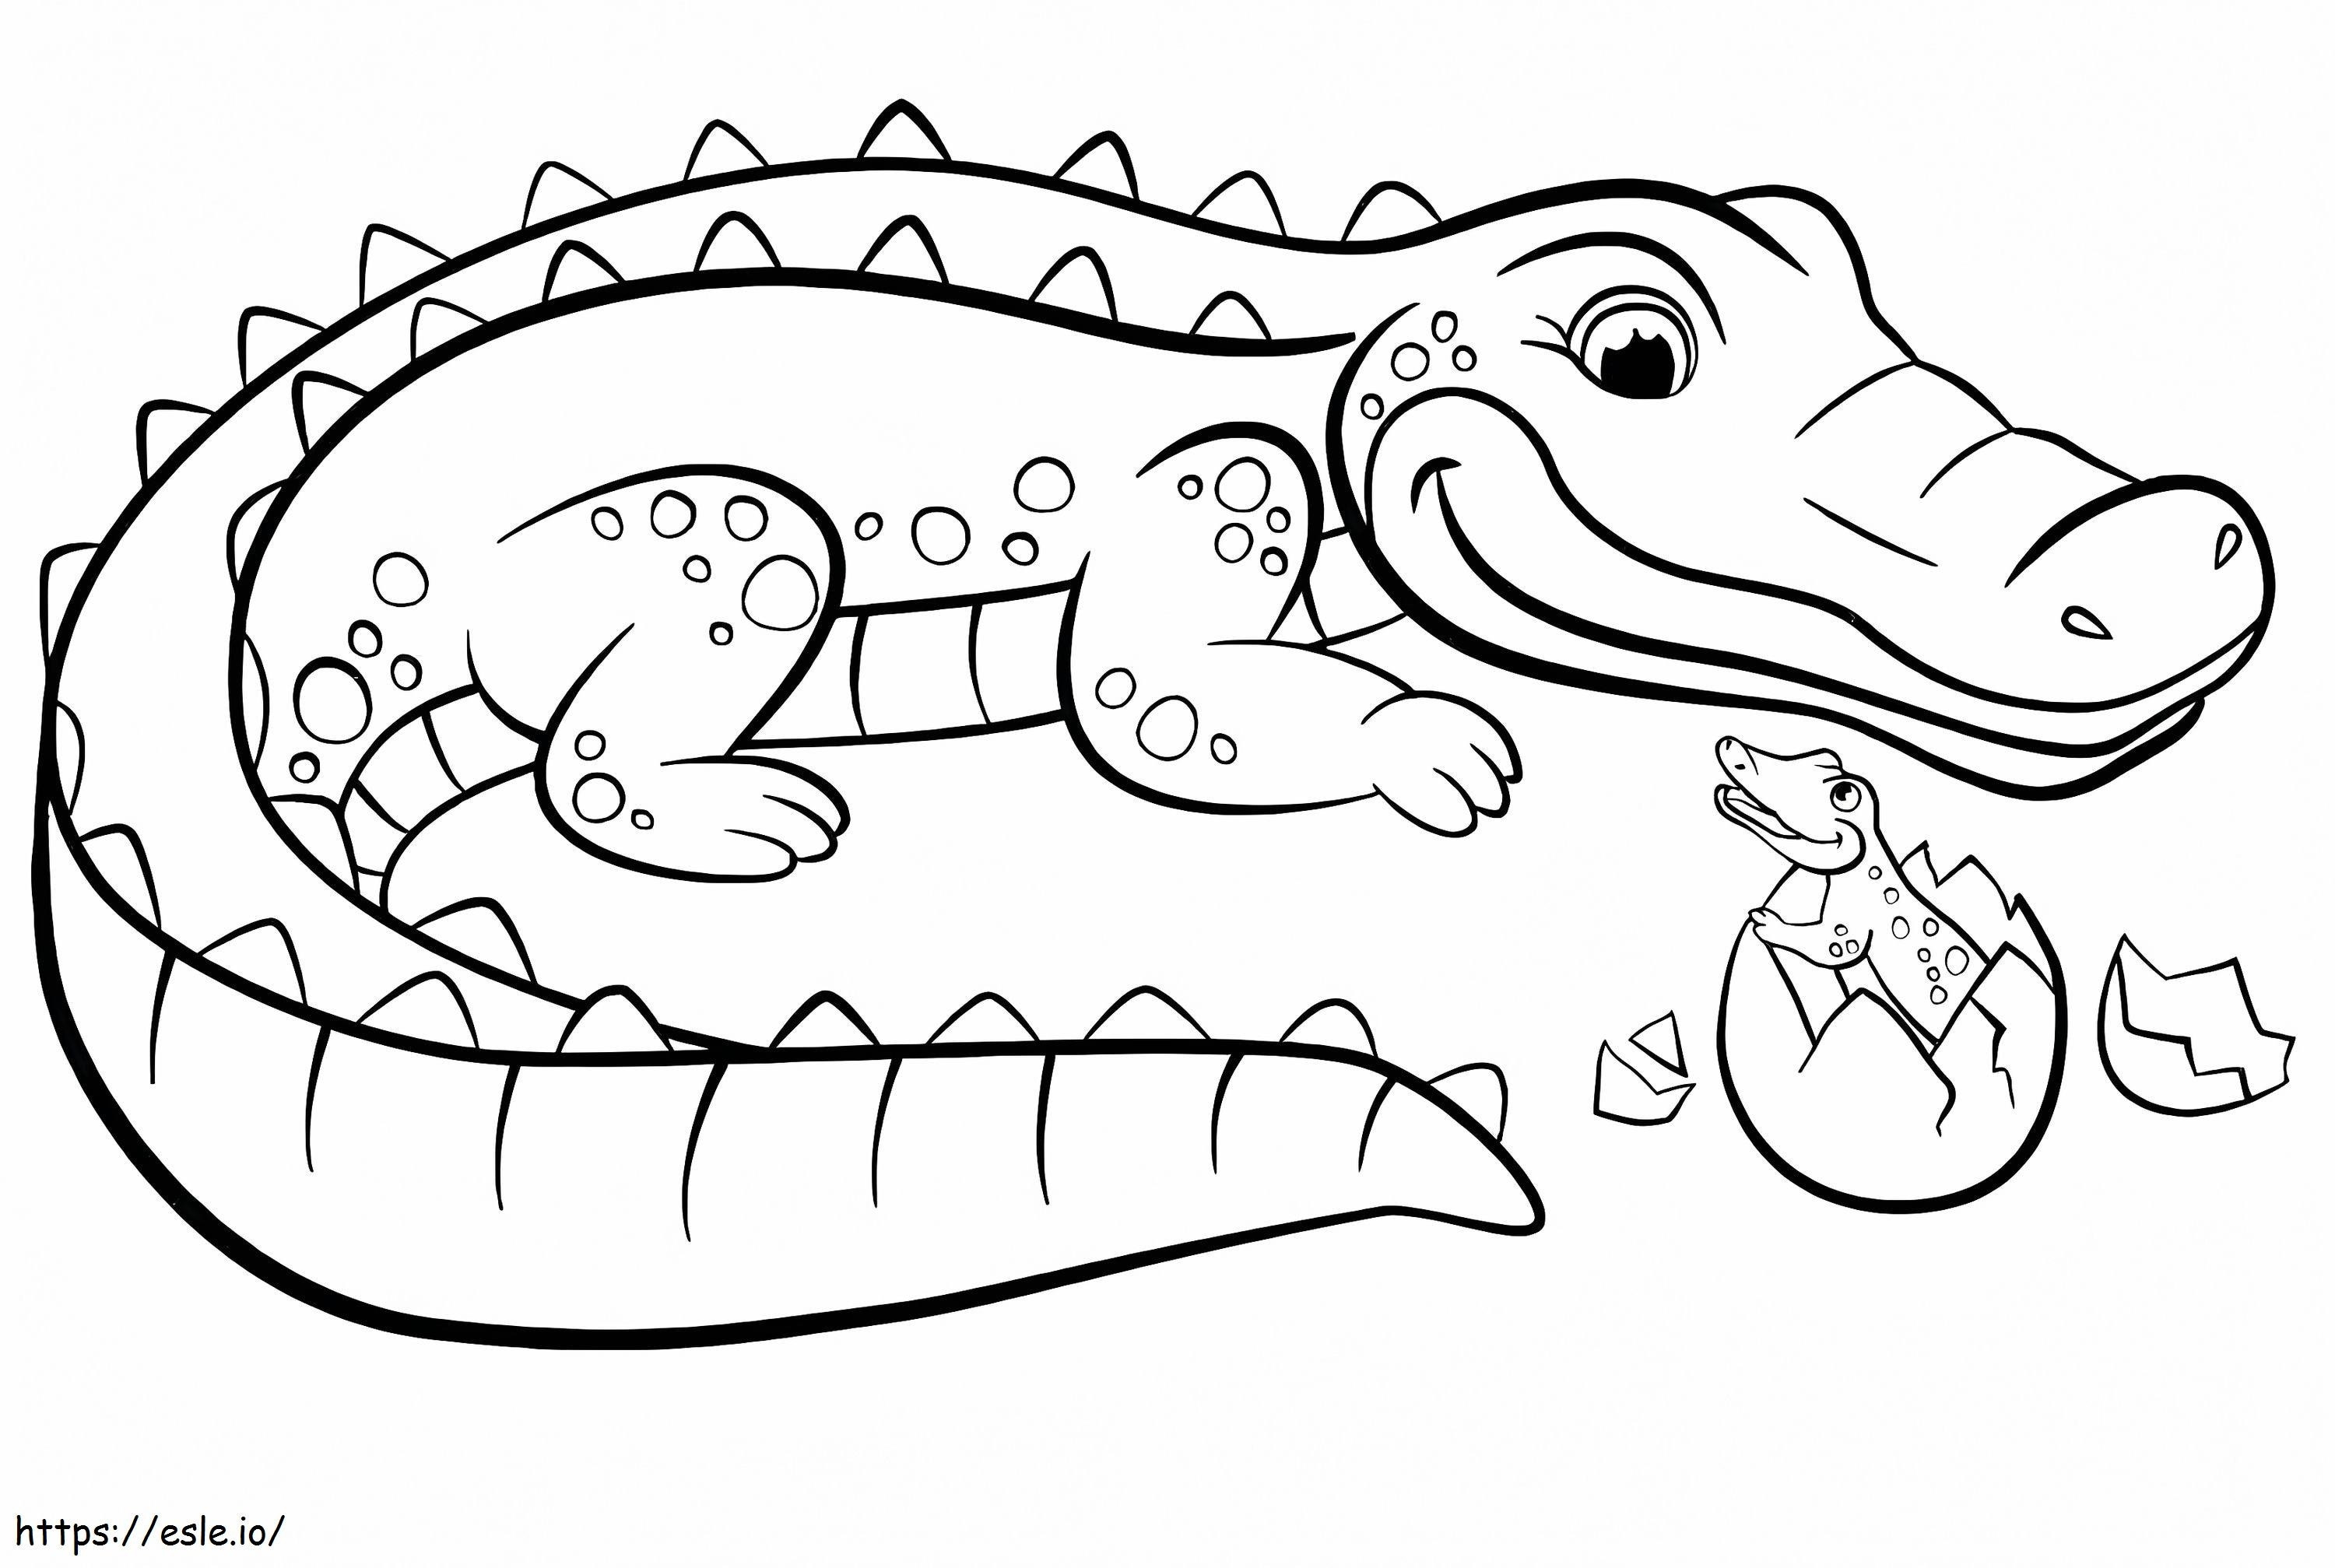  Krokodil-Malseite, niedliches Cartoon-Krokodil, Krokodil-Malblatt, Krokodil-Farbseiten, Alligator-Farbseite, egoistisches Krokodil ausmalbilder